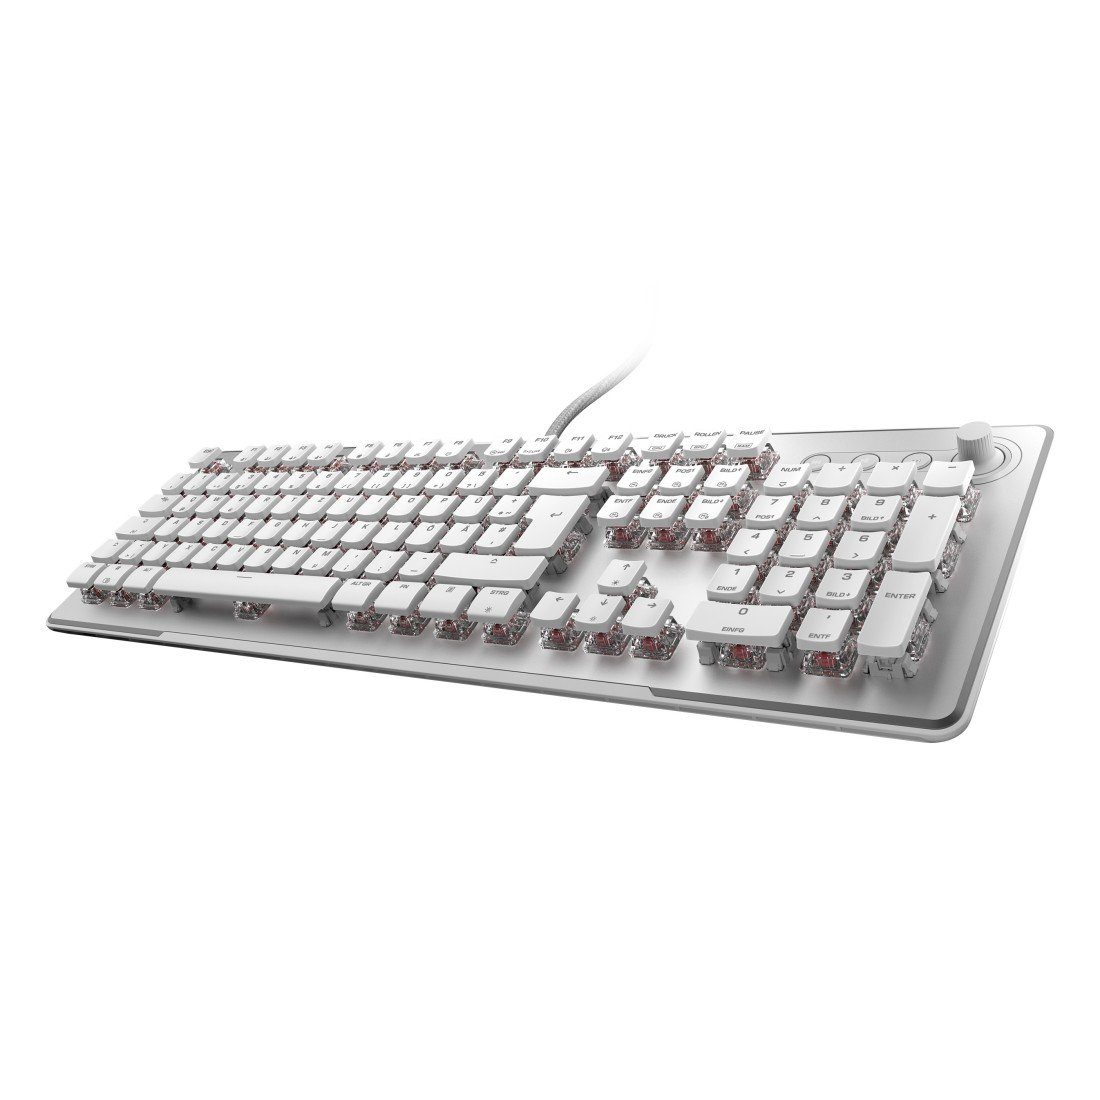 ROCCAT Gaming-Tastatur "Vulcan II Max", weiß mechanische, Tasten Gaming-Tastatur lineare